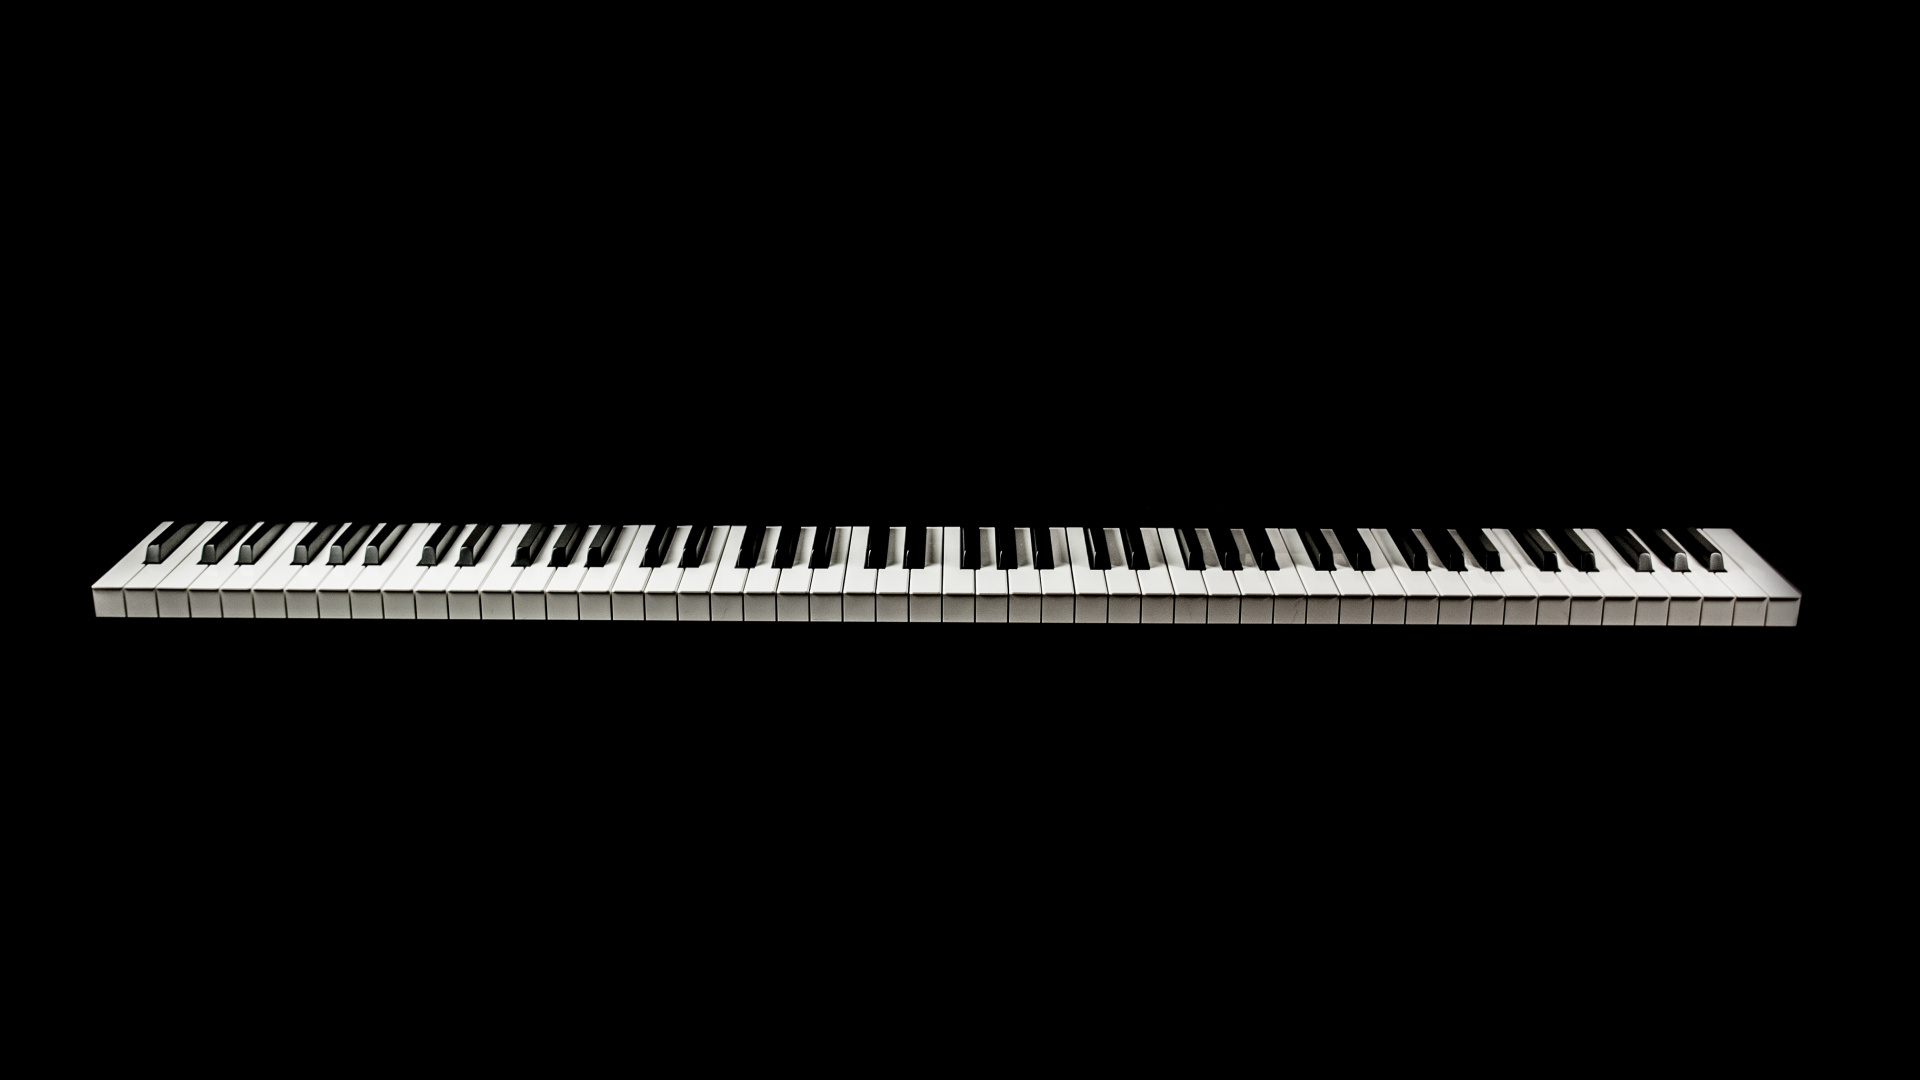 Musical Keyboard, Digital Piano, Electric Piano, Piano, Keyboard. Wallpaper in 1920x1080 Resolution